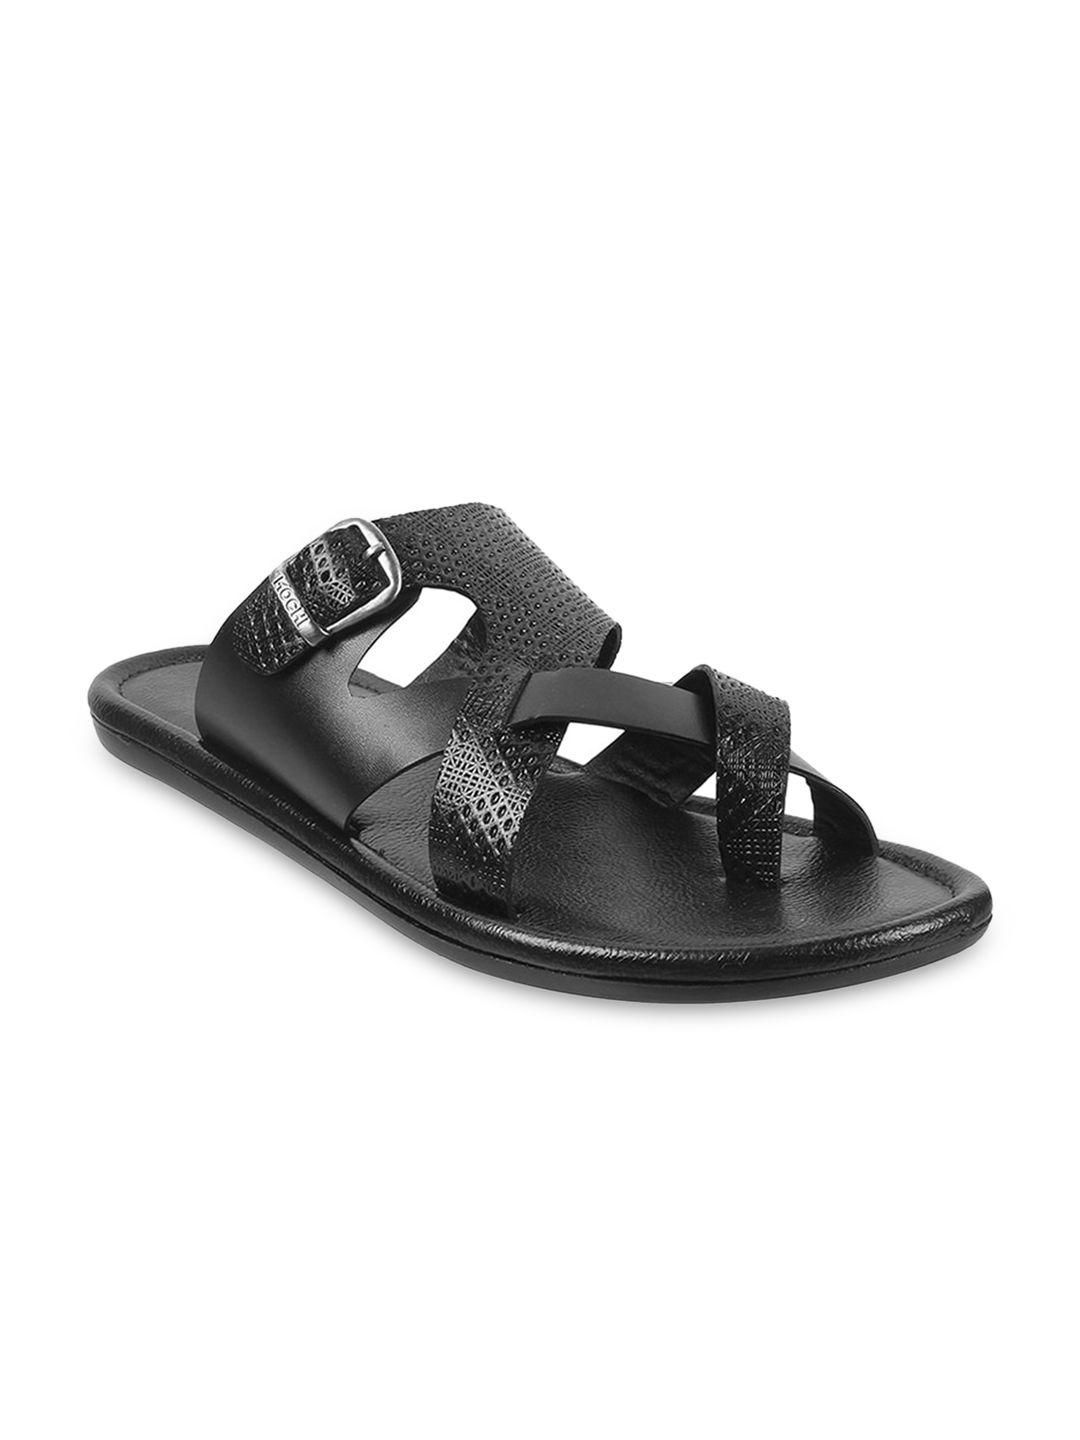 mochi men leather comfort sandals